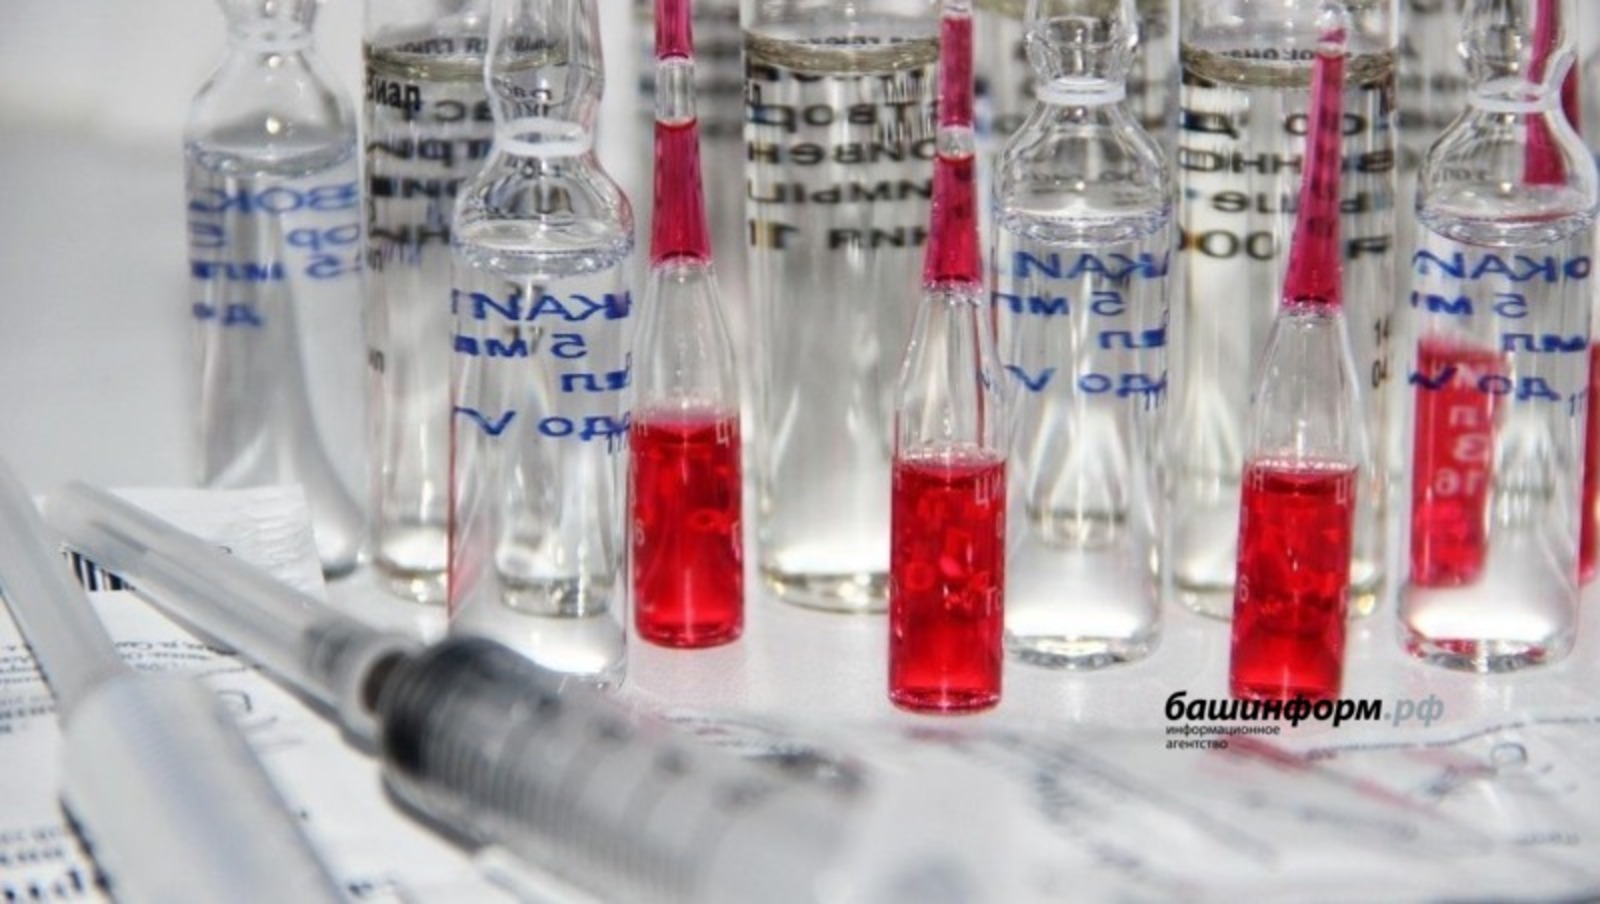 Үҫмерҙәр өсөн 28 мең доза "Спутник М" вакцинаһы ҡайтарыласаҡ